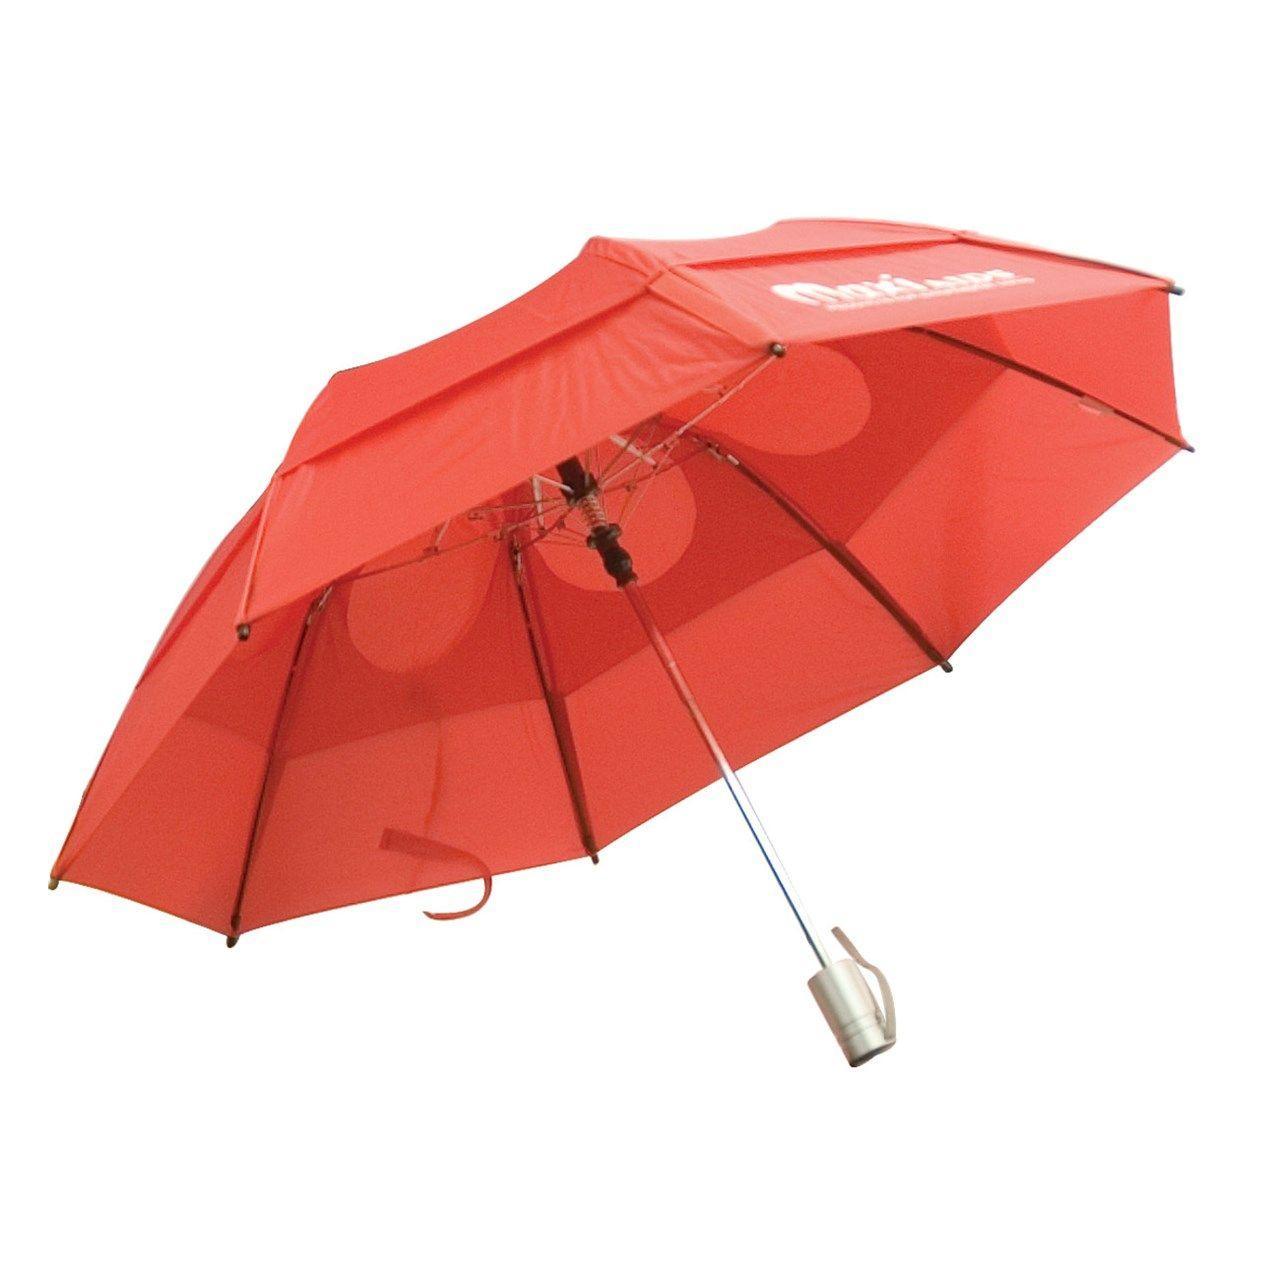 White and Red Umbrella Logo - MaxiAids | Folding Umbrella - Red with White MaxiAids Logo